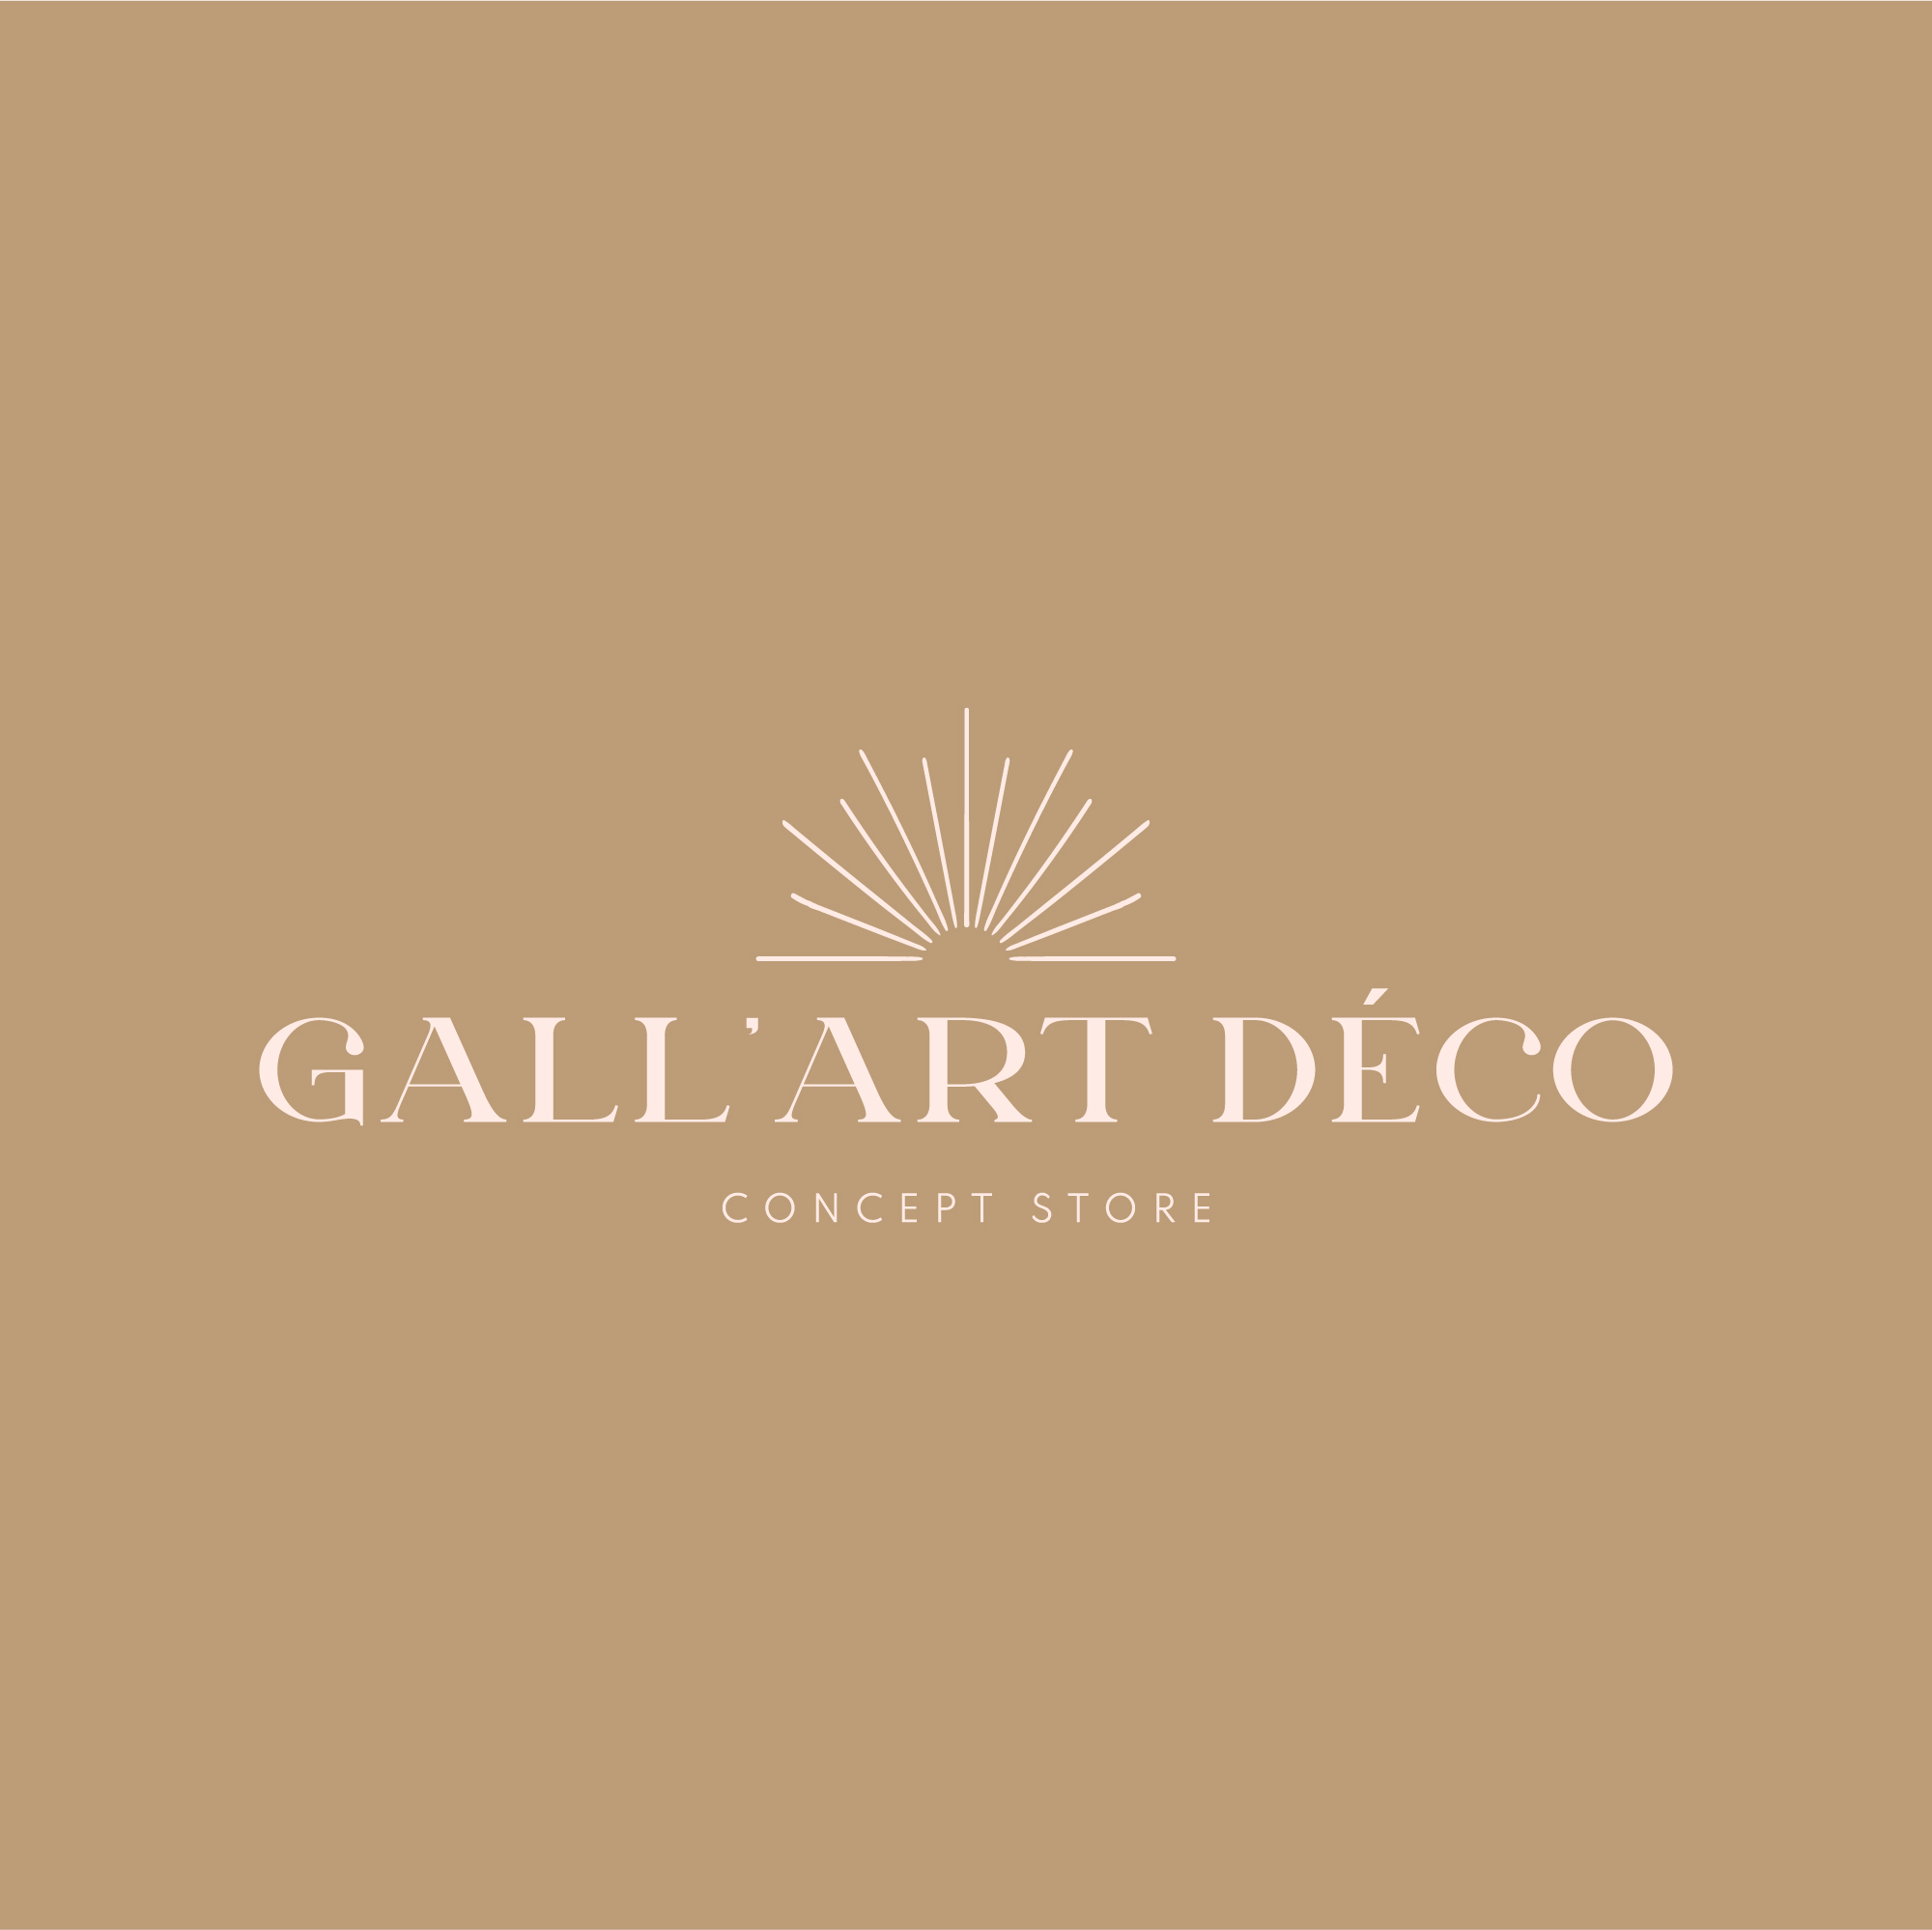 Gall' Art Deco